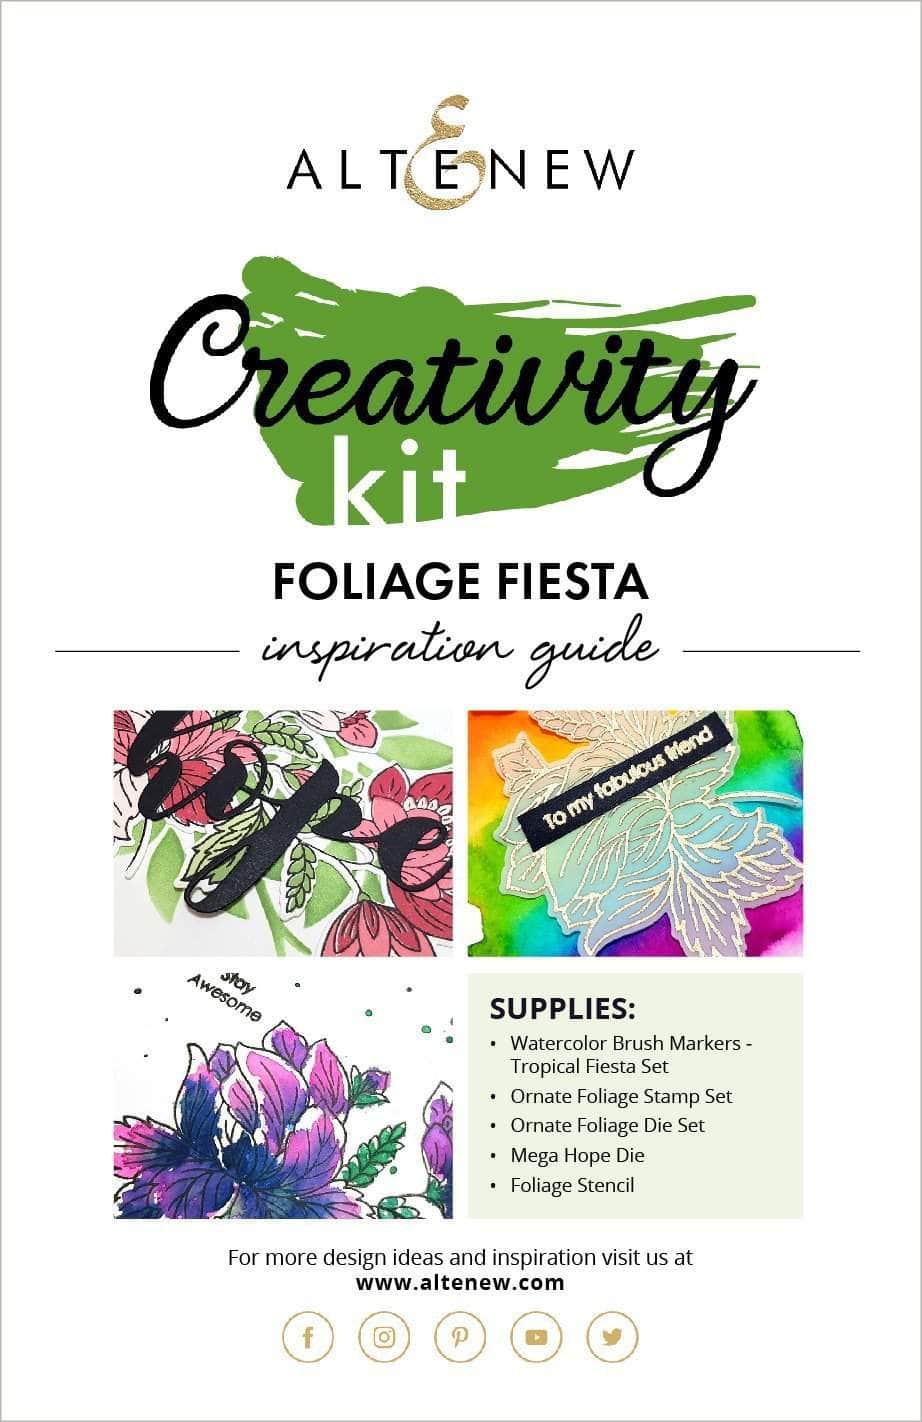 Printed Media Foliage Fiesta Creativity Kit Inspiration Guide